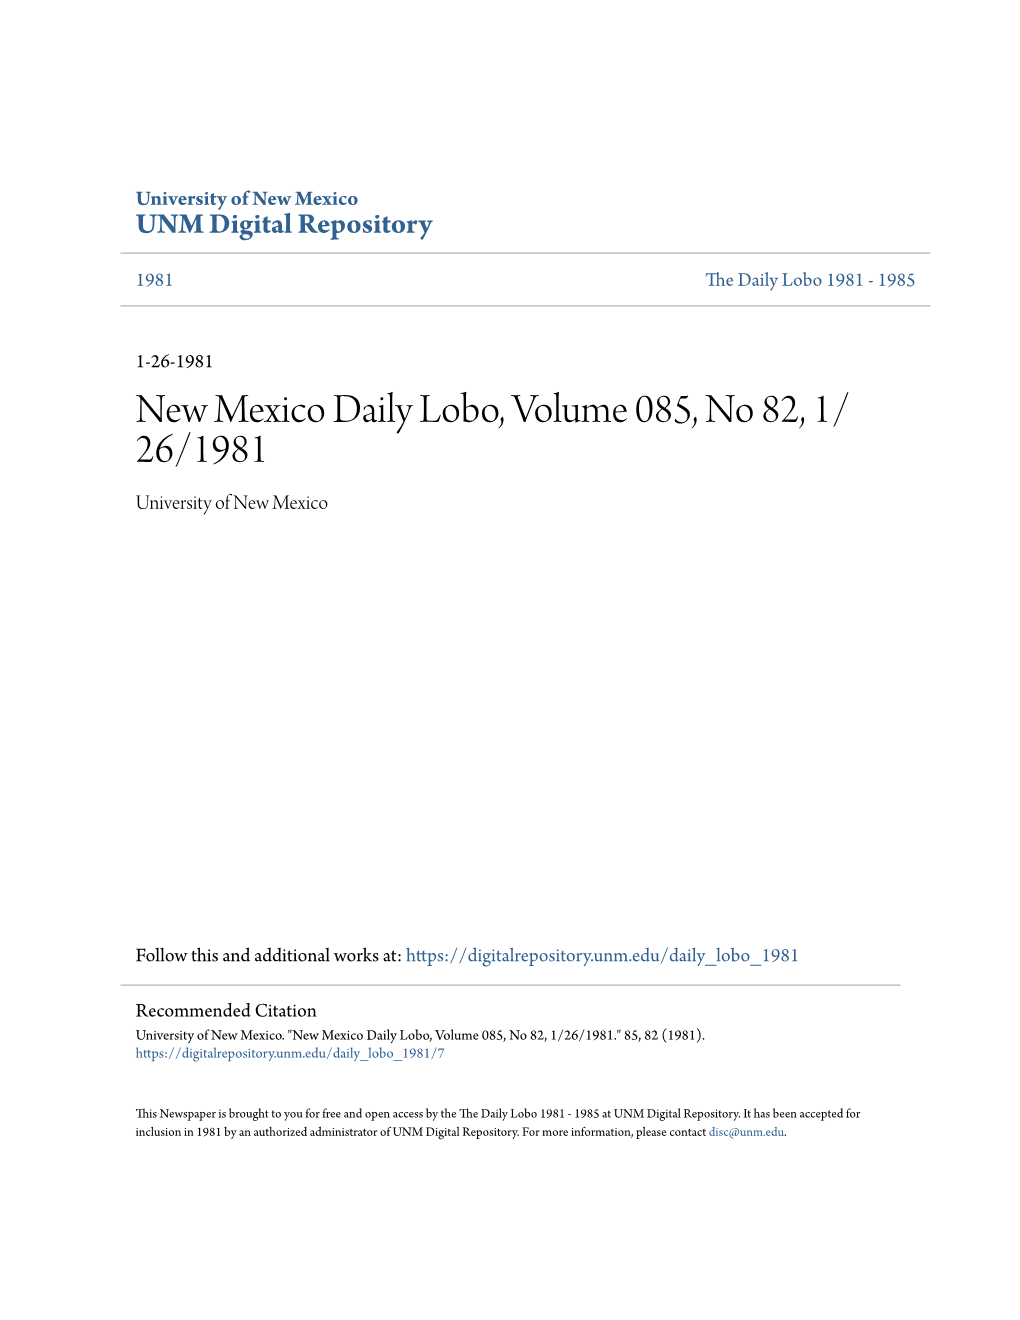 New Mexico Daily Lobo, Volume 085, No 82, 1/26/1981." 85, 82 (1981)